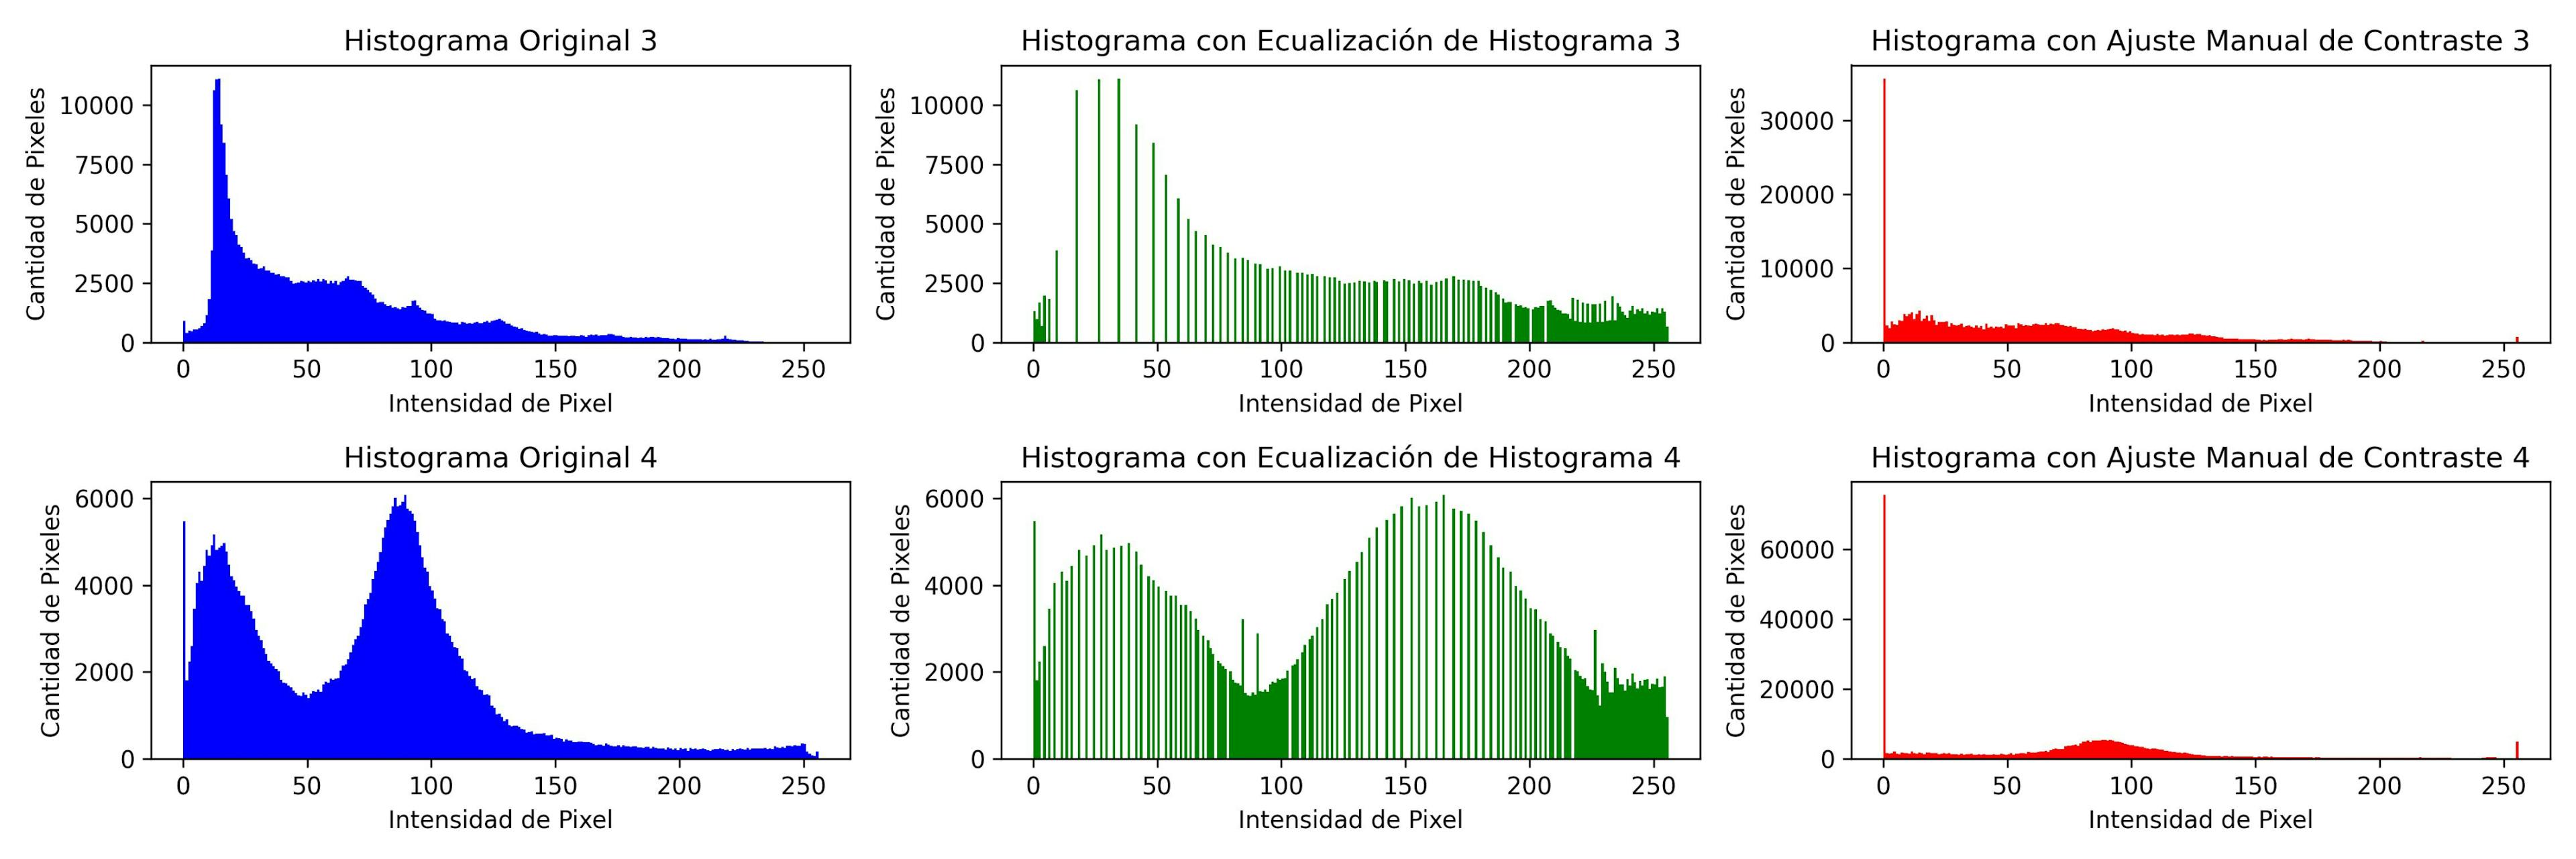 Figure 5. Comparing histograms